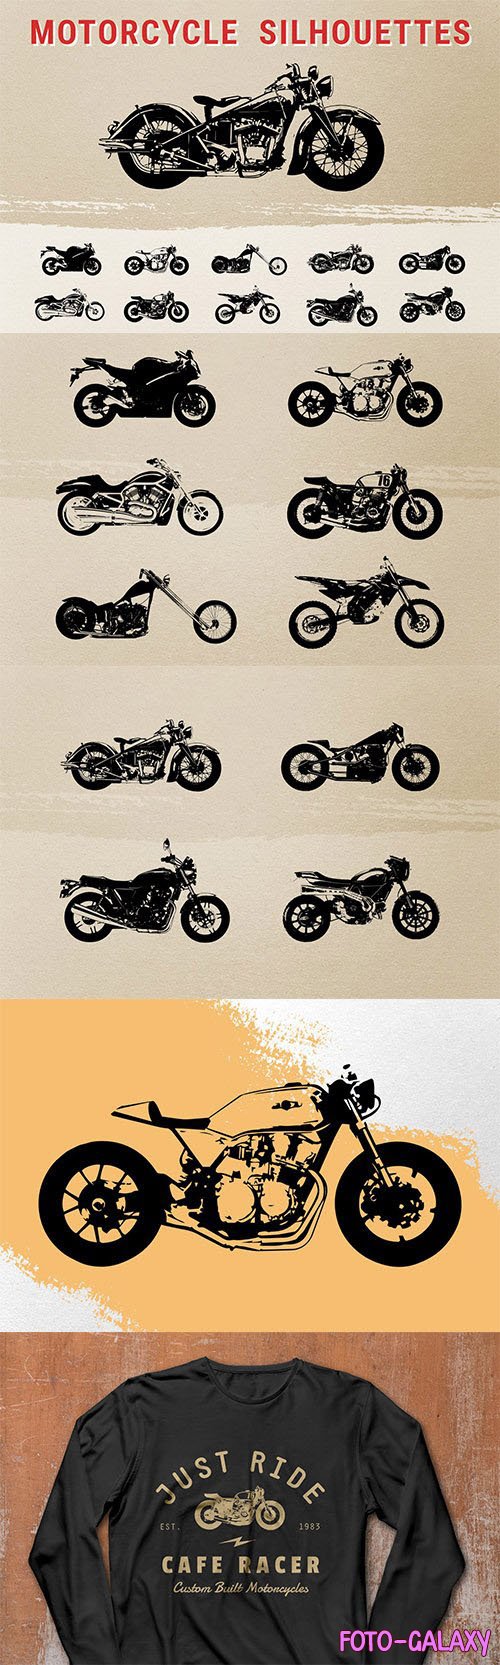 Motorcycle Silhouettes - 10 Vintage Vector Designs